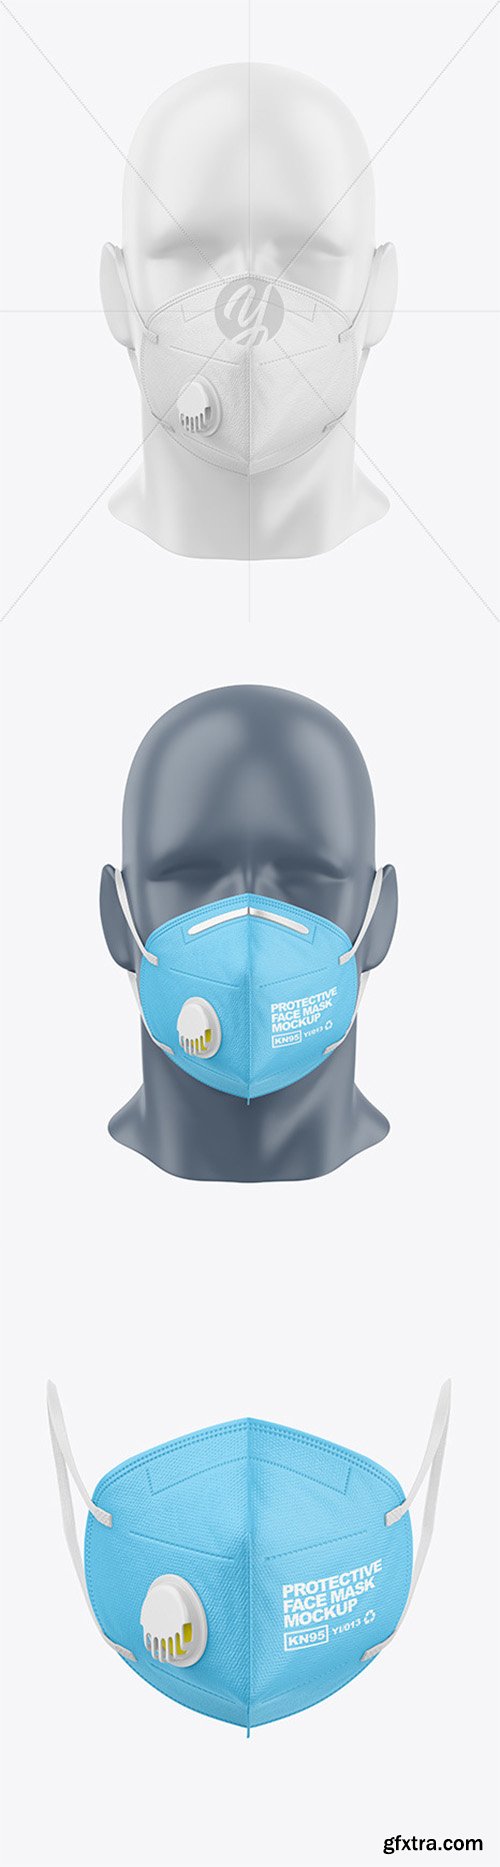 Protective Face Mask Mockup 80058